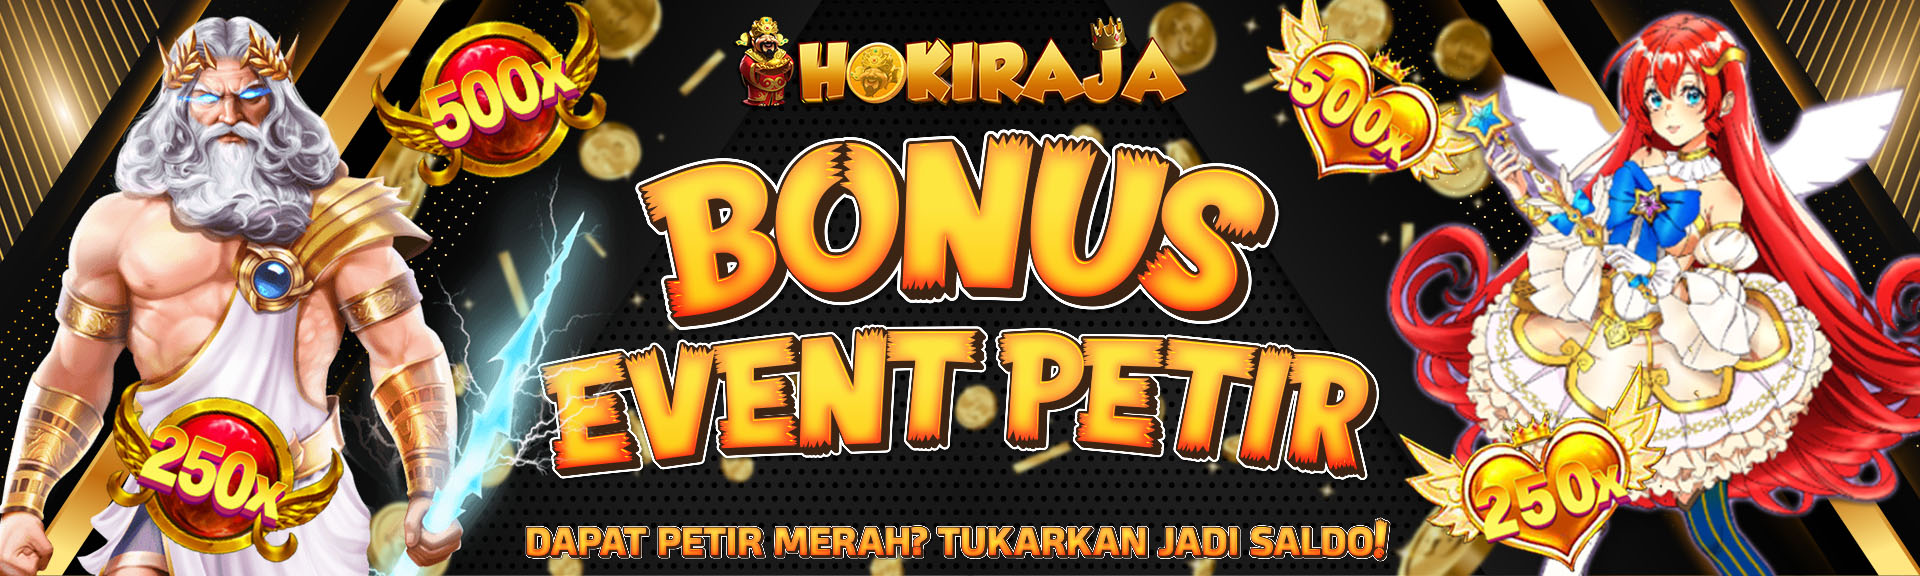 Bonus Event Petir